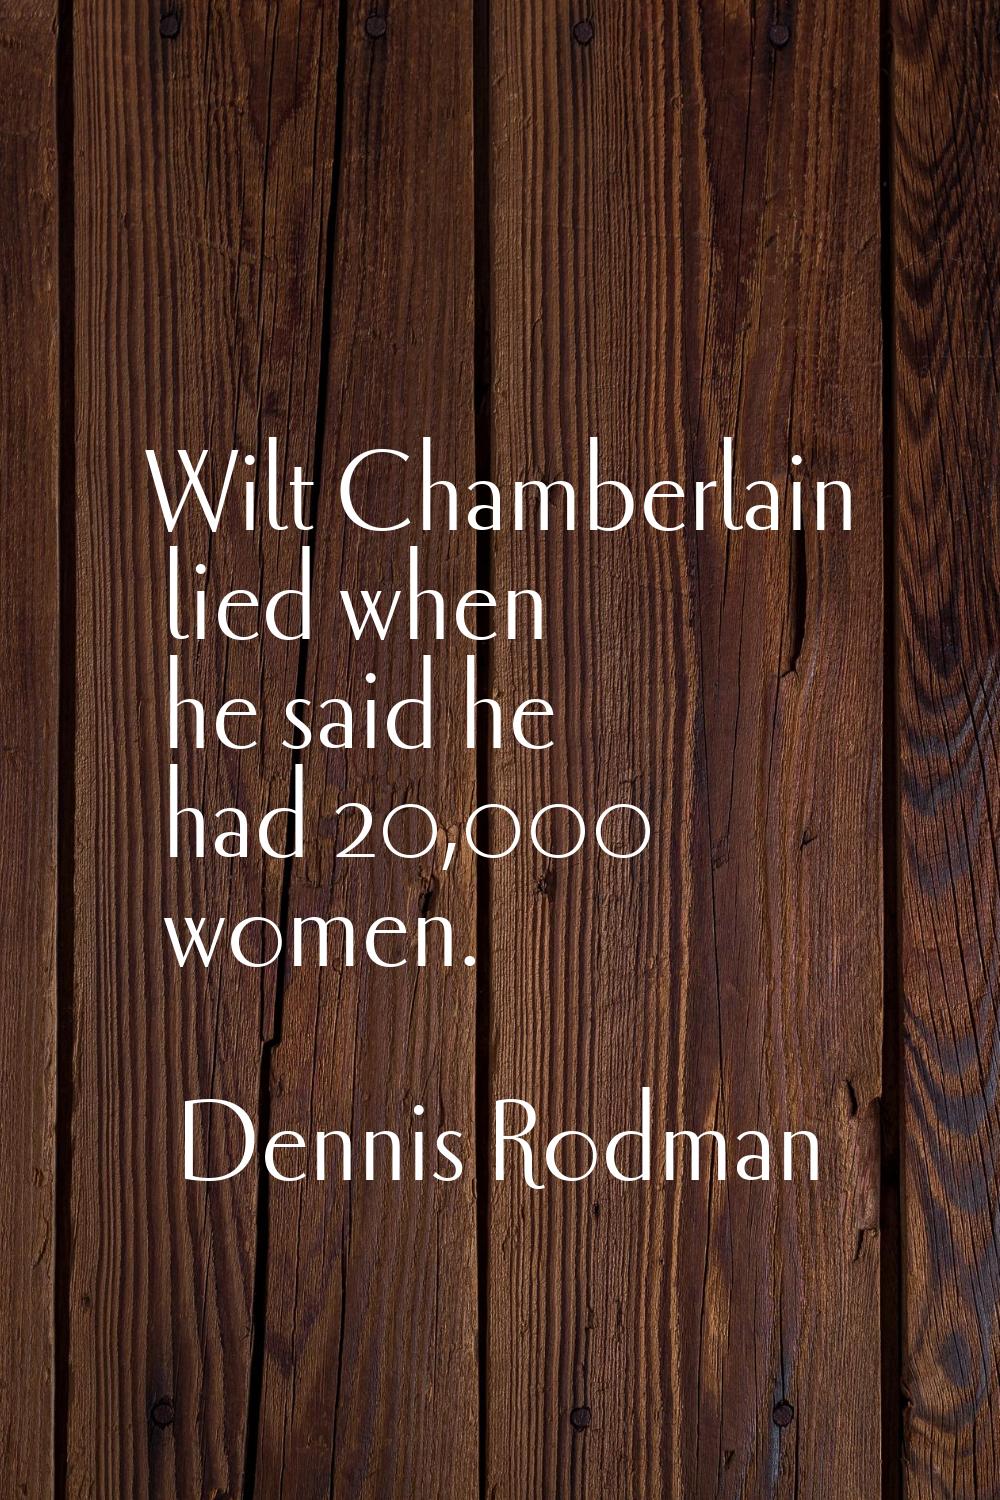 Wilt Chamberlain lied when he said he had 20,000 women.